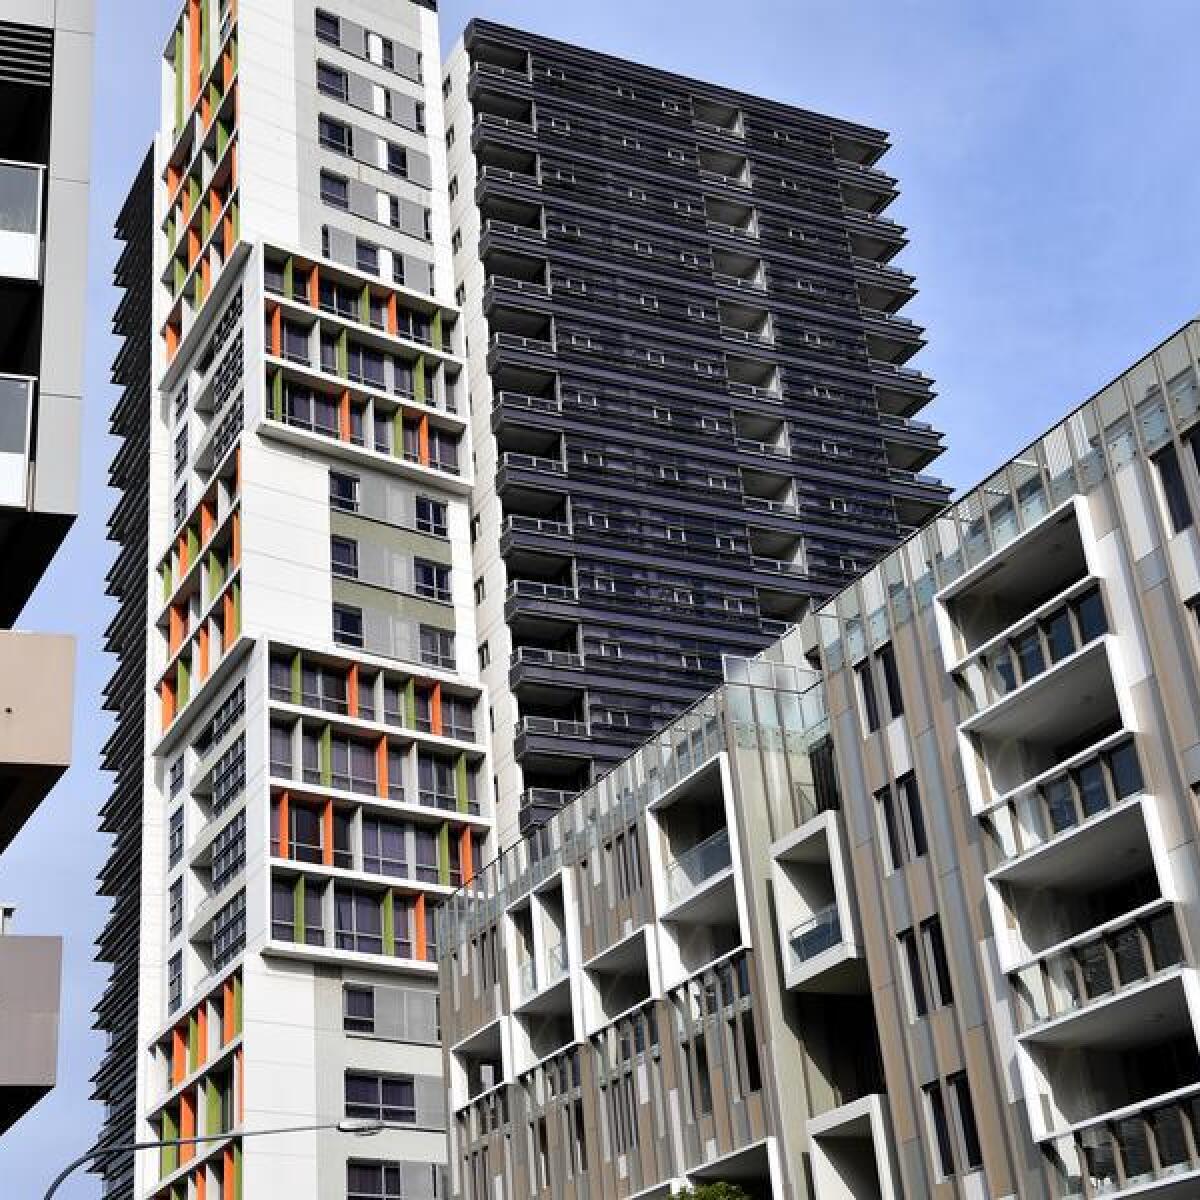 Residential properties in Sydney (file image)